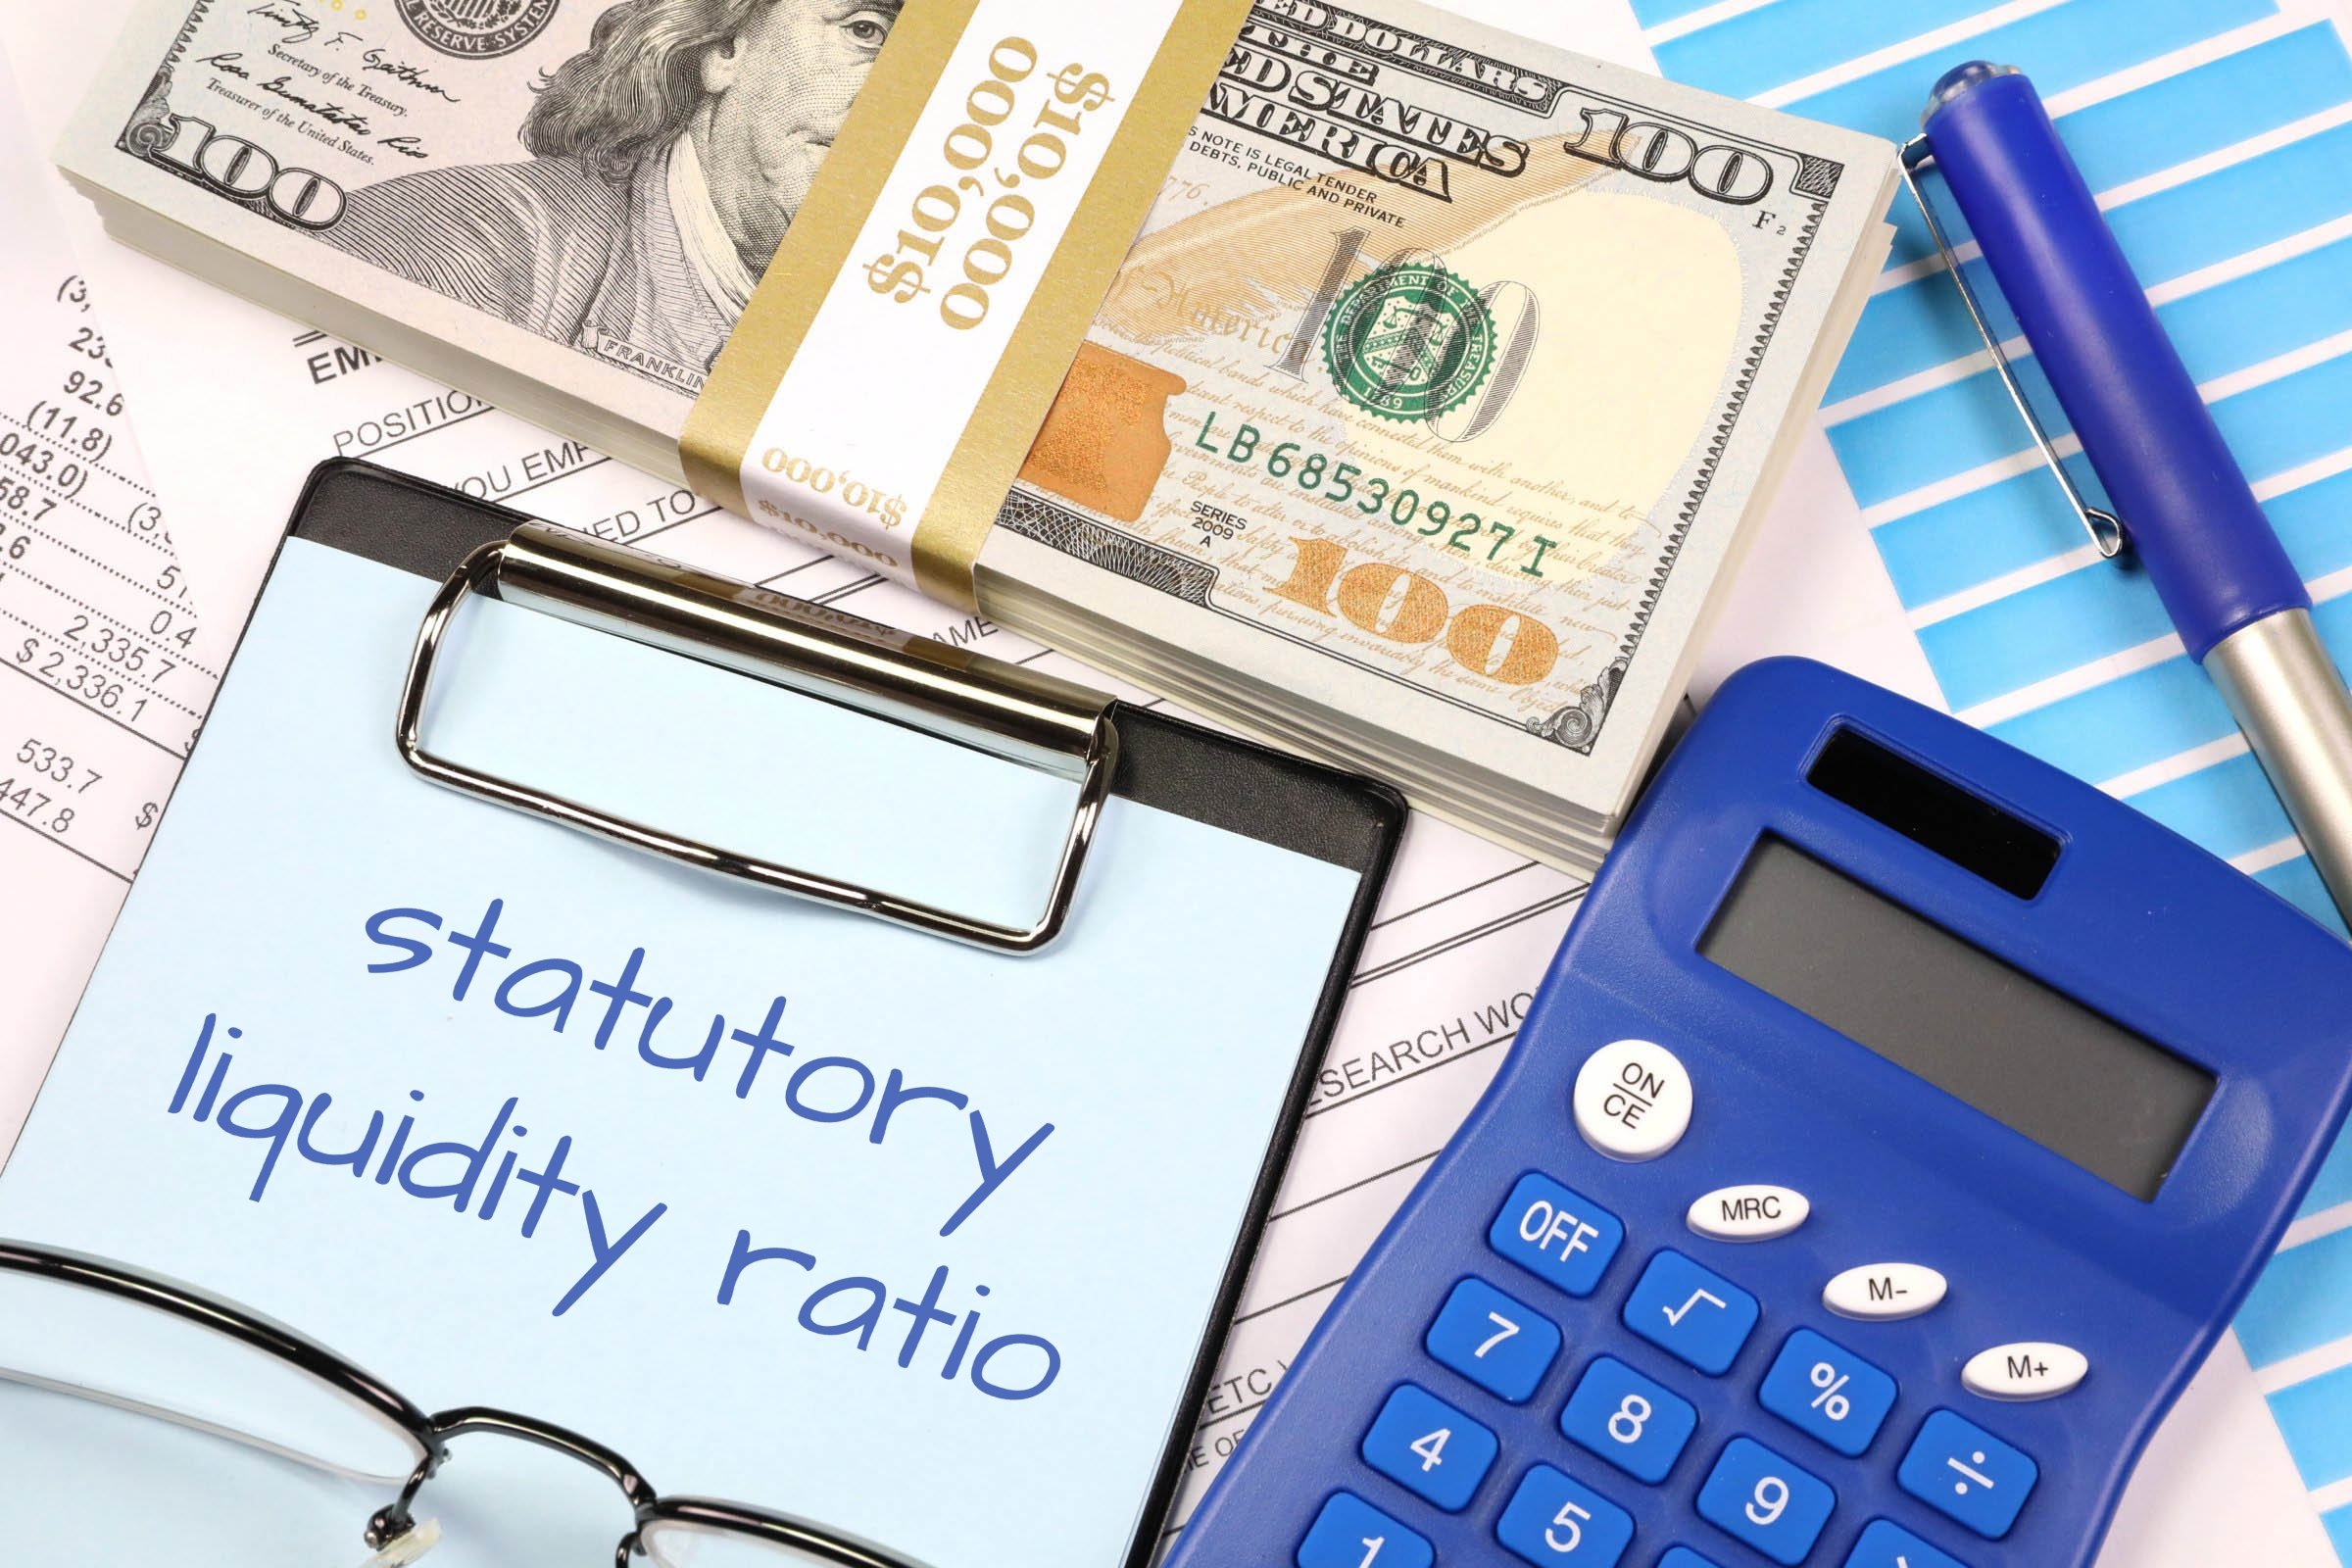 Statutory Liquidity Ratio